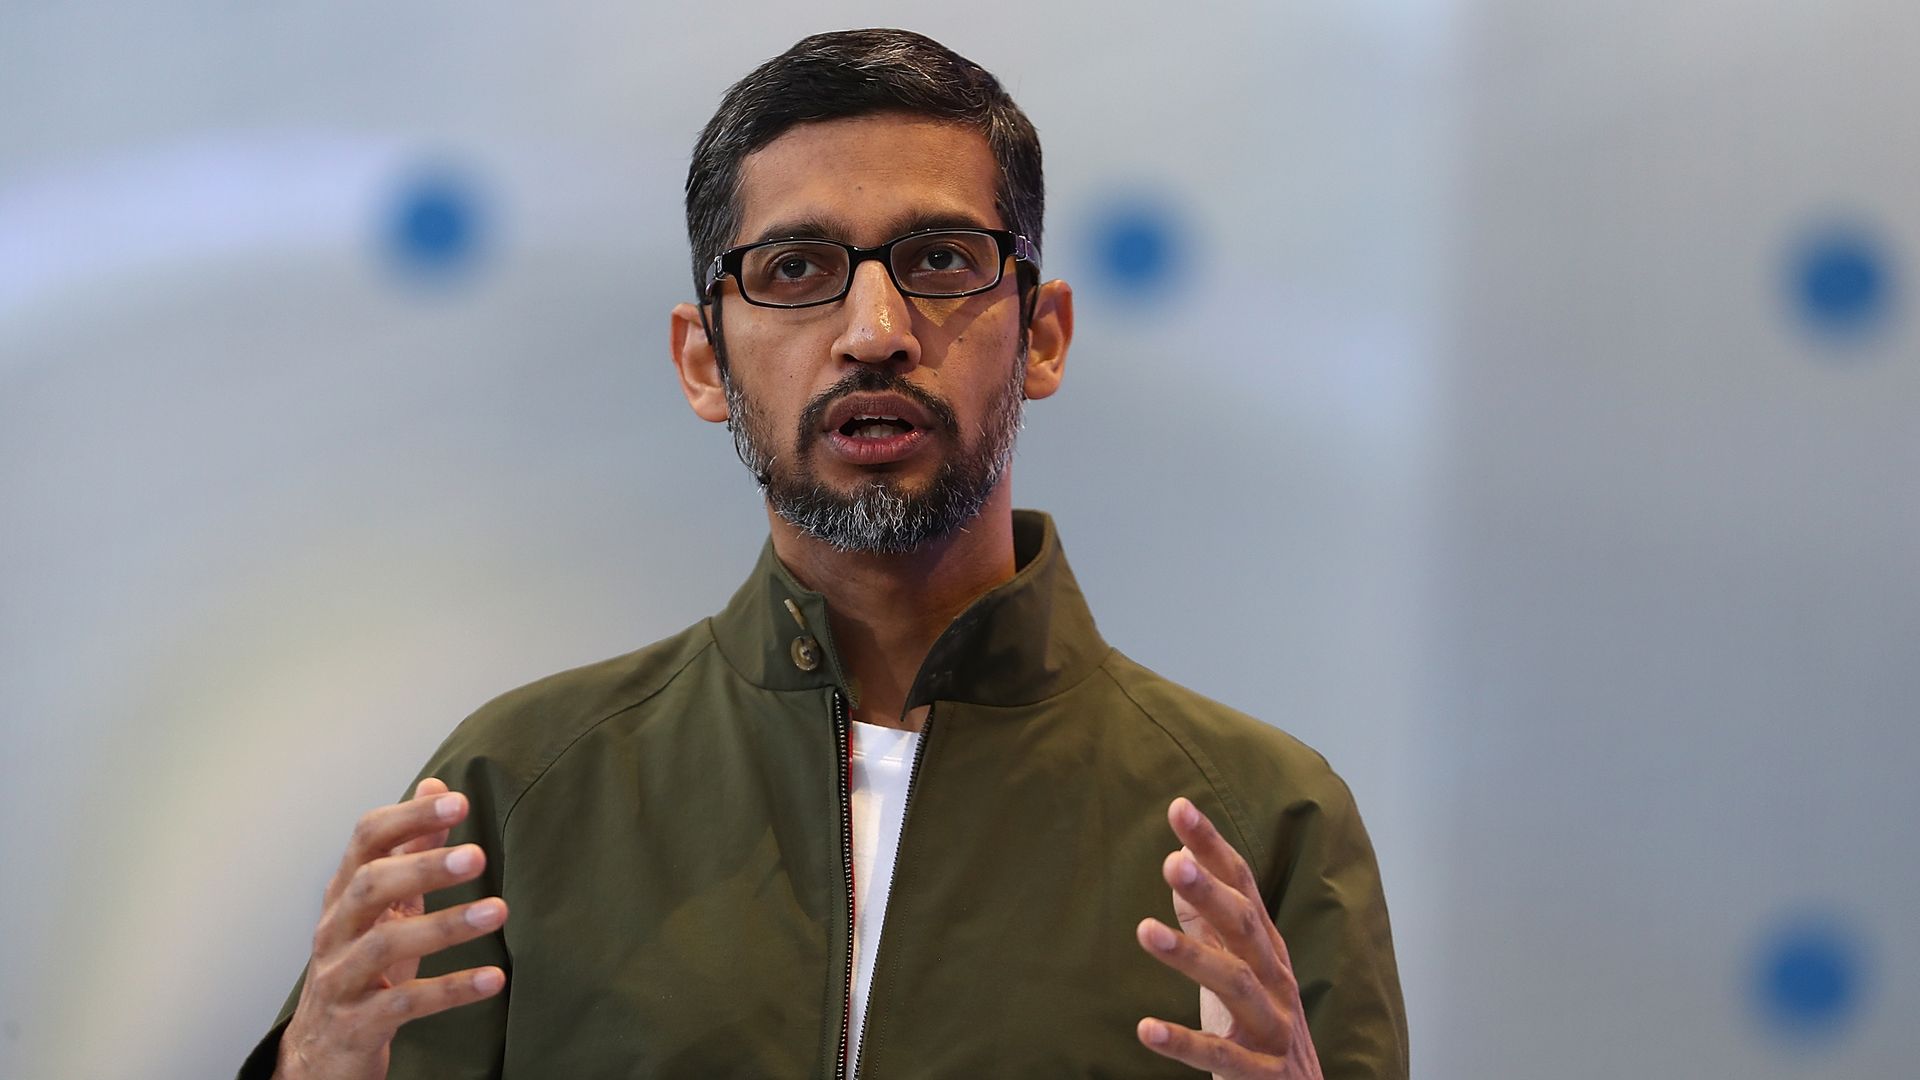 Google CEO Sundar Pichai, speaking at the company's I/O developer conference